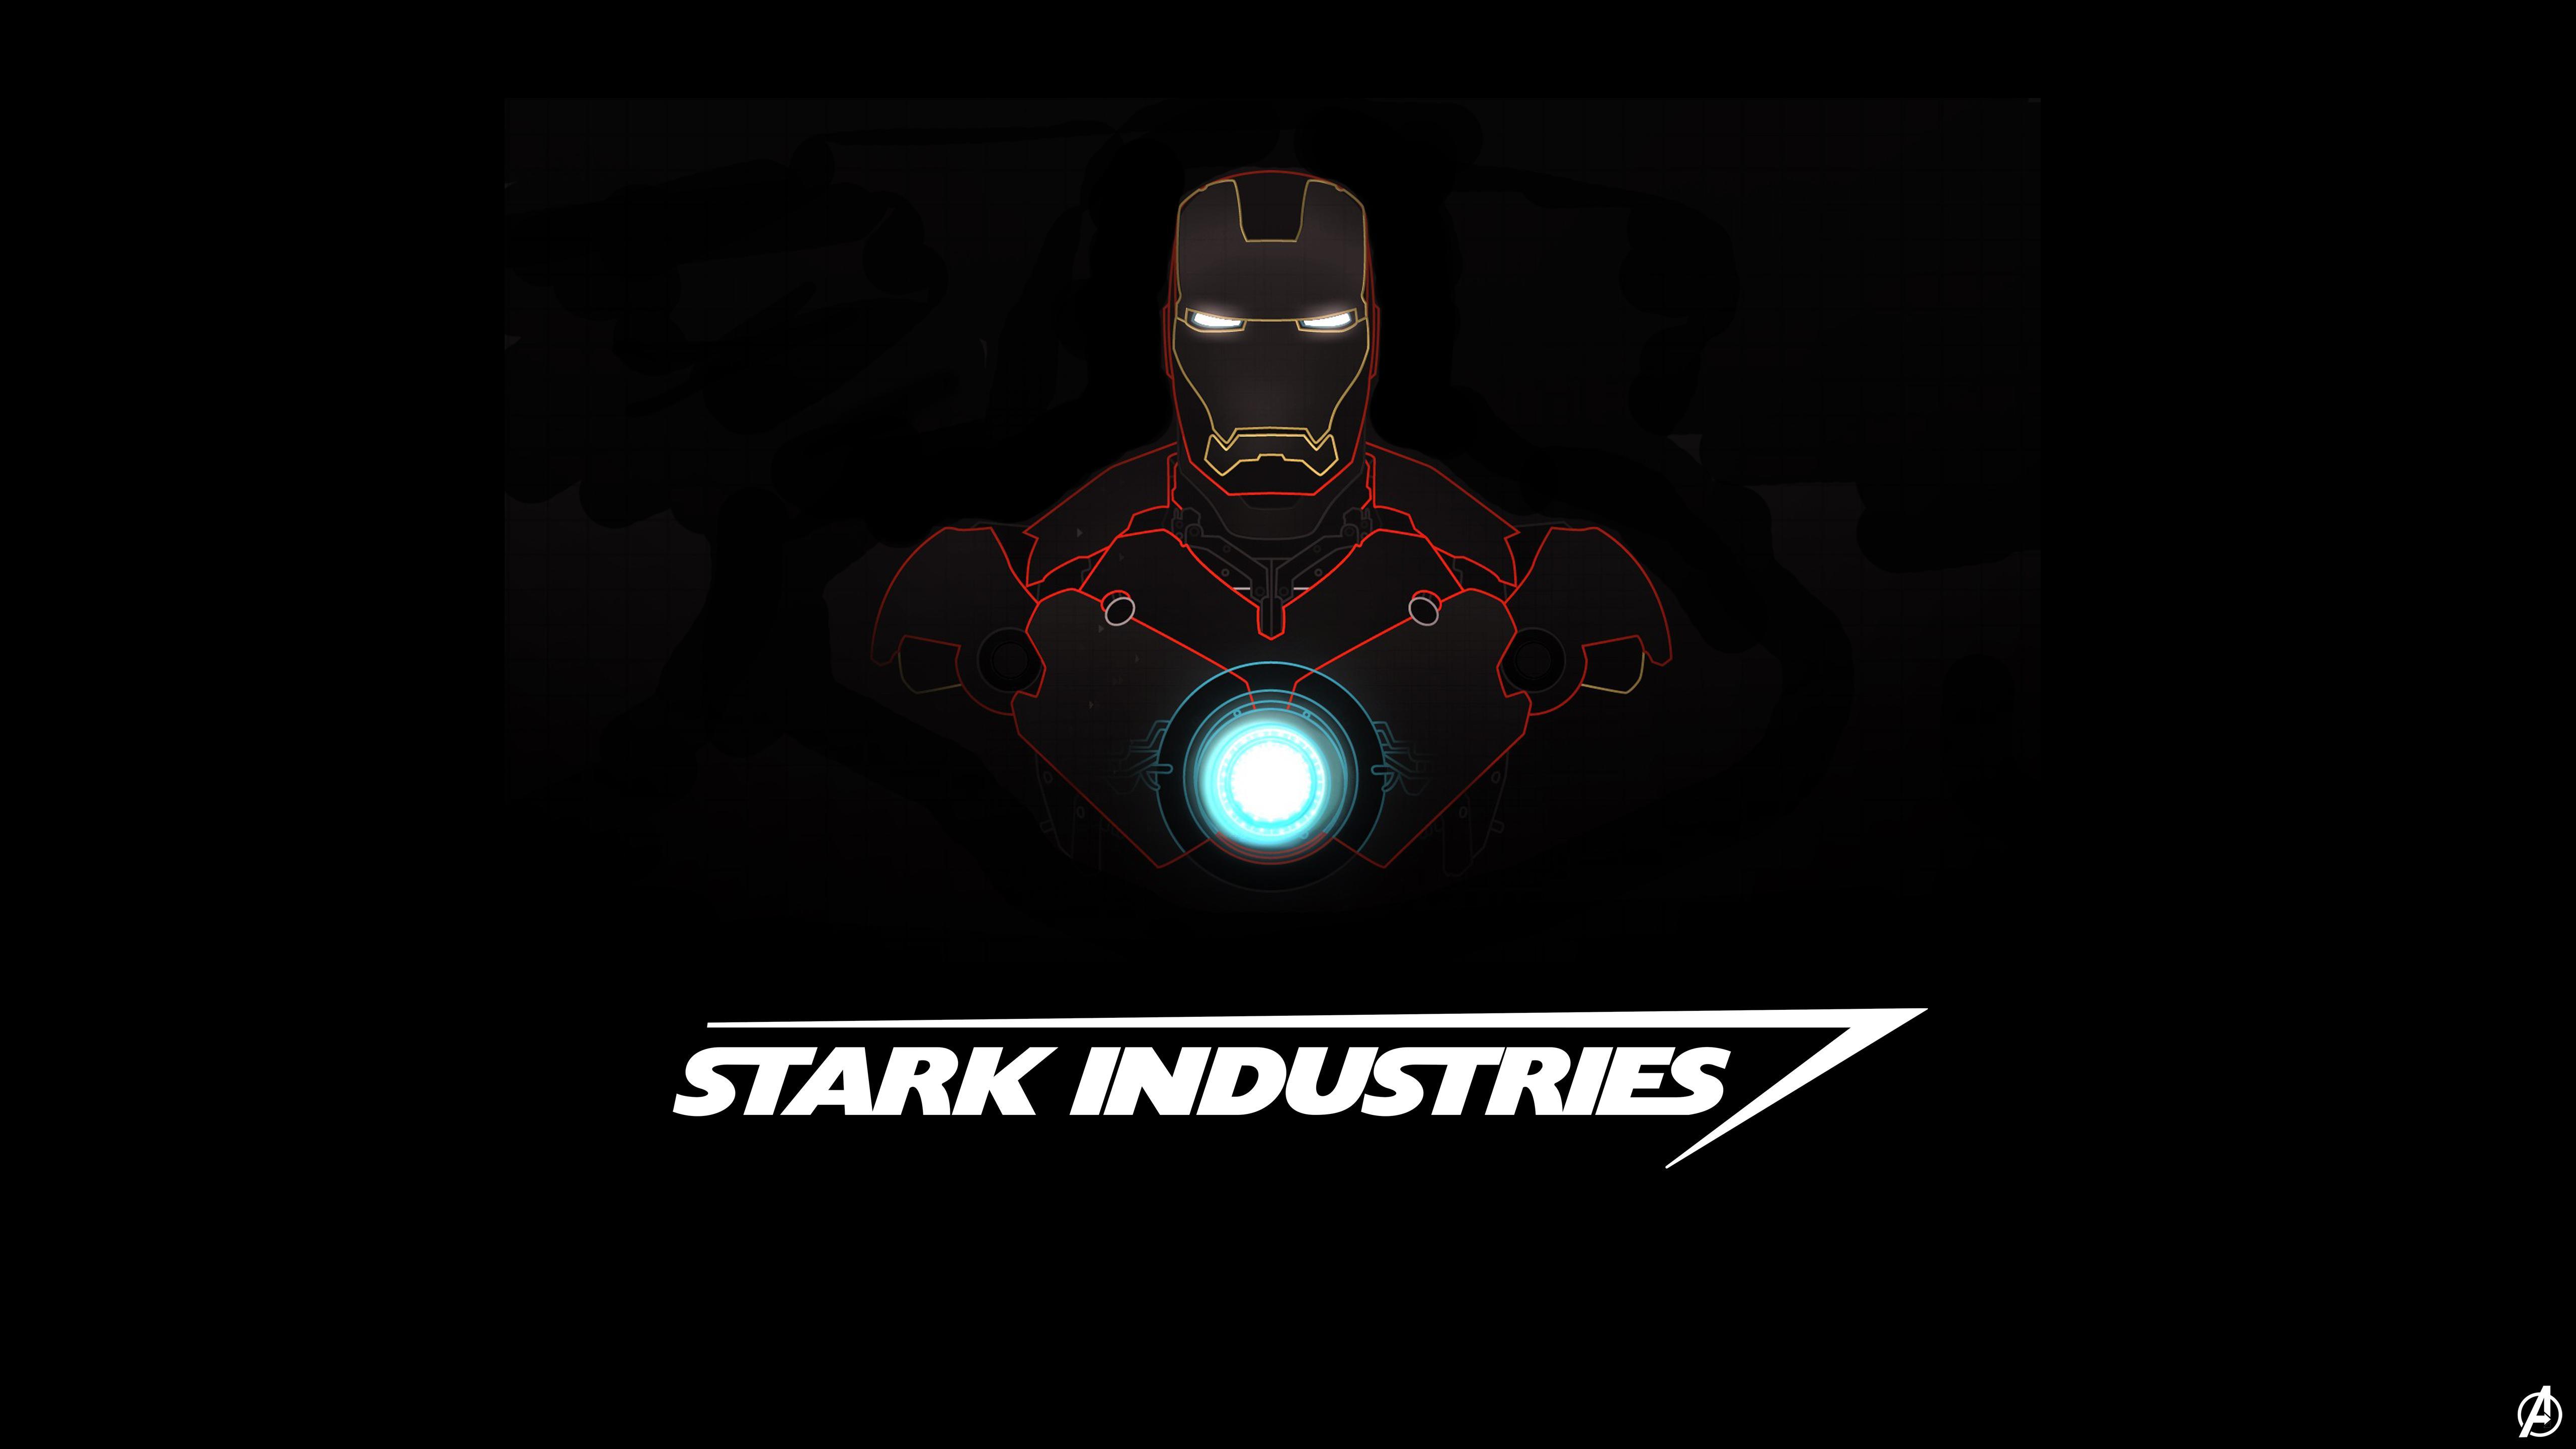 #Iron Man, K, #Stark Industries, #Minimal, #Dark. Creative